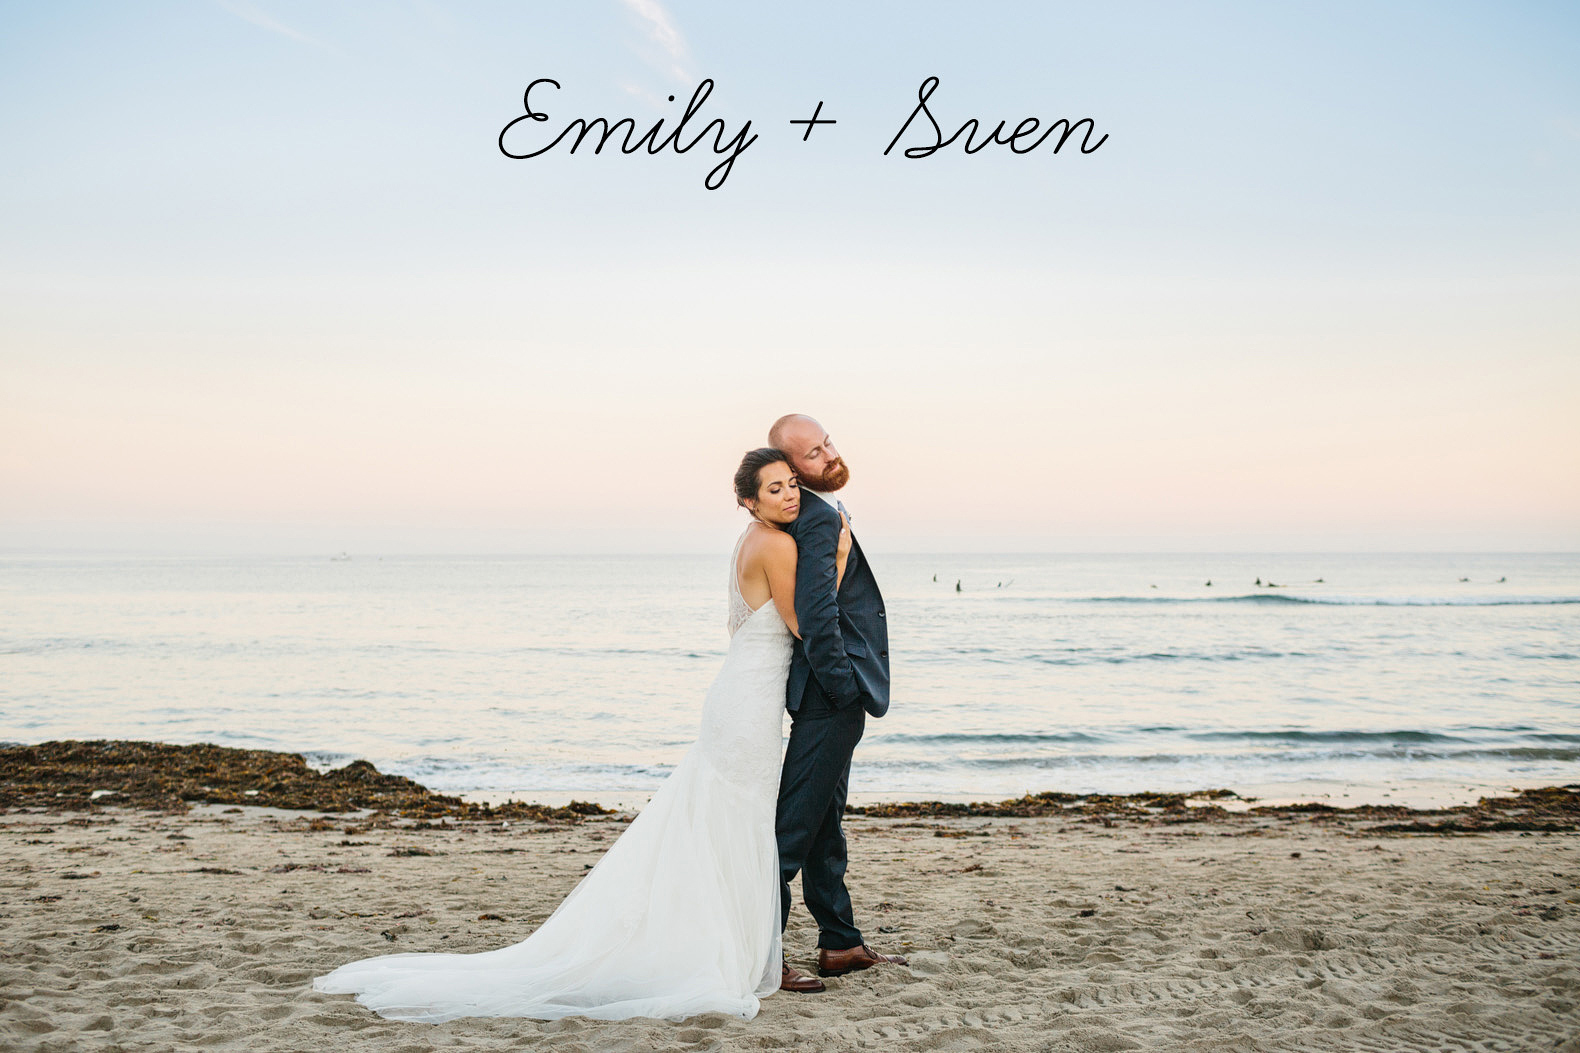 These are Emily + Sven's wedding photos. 